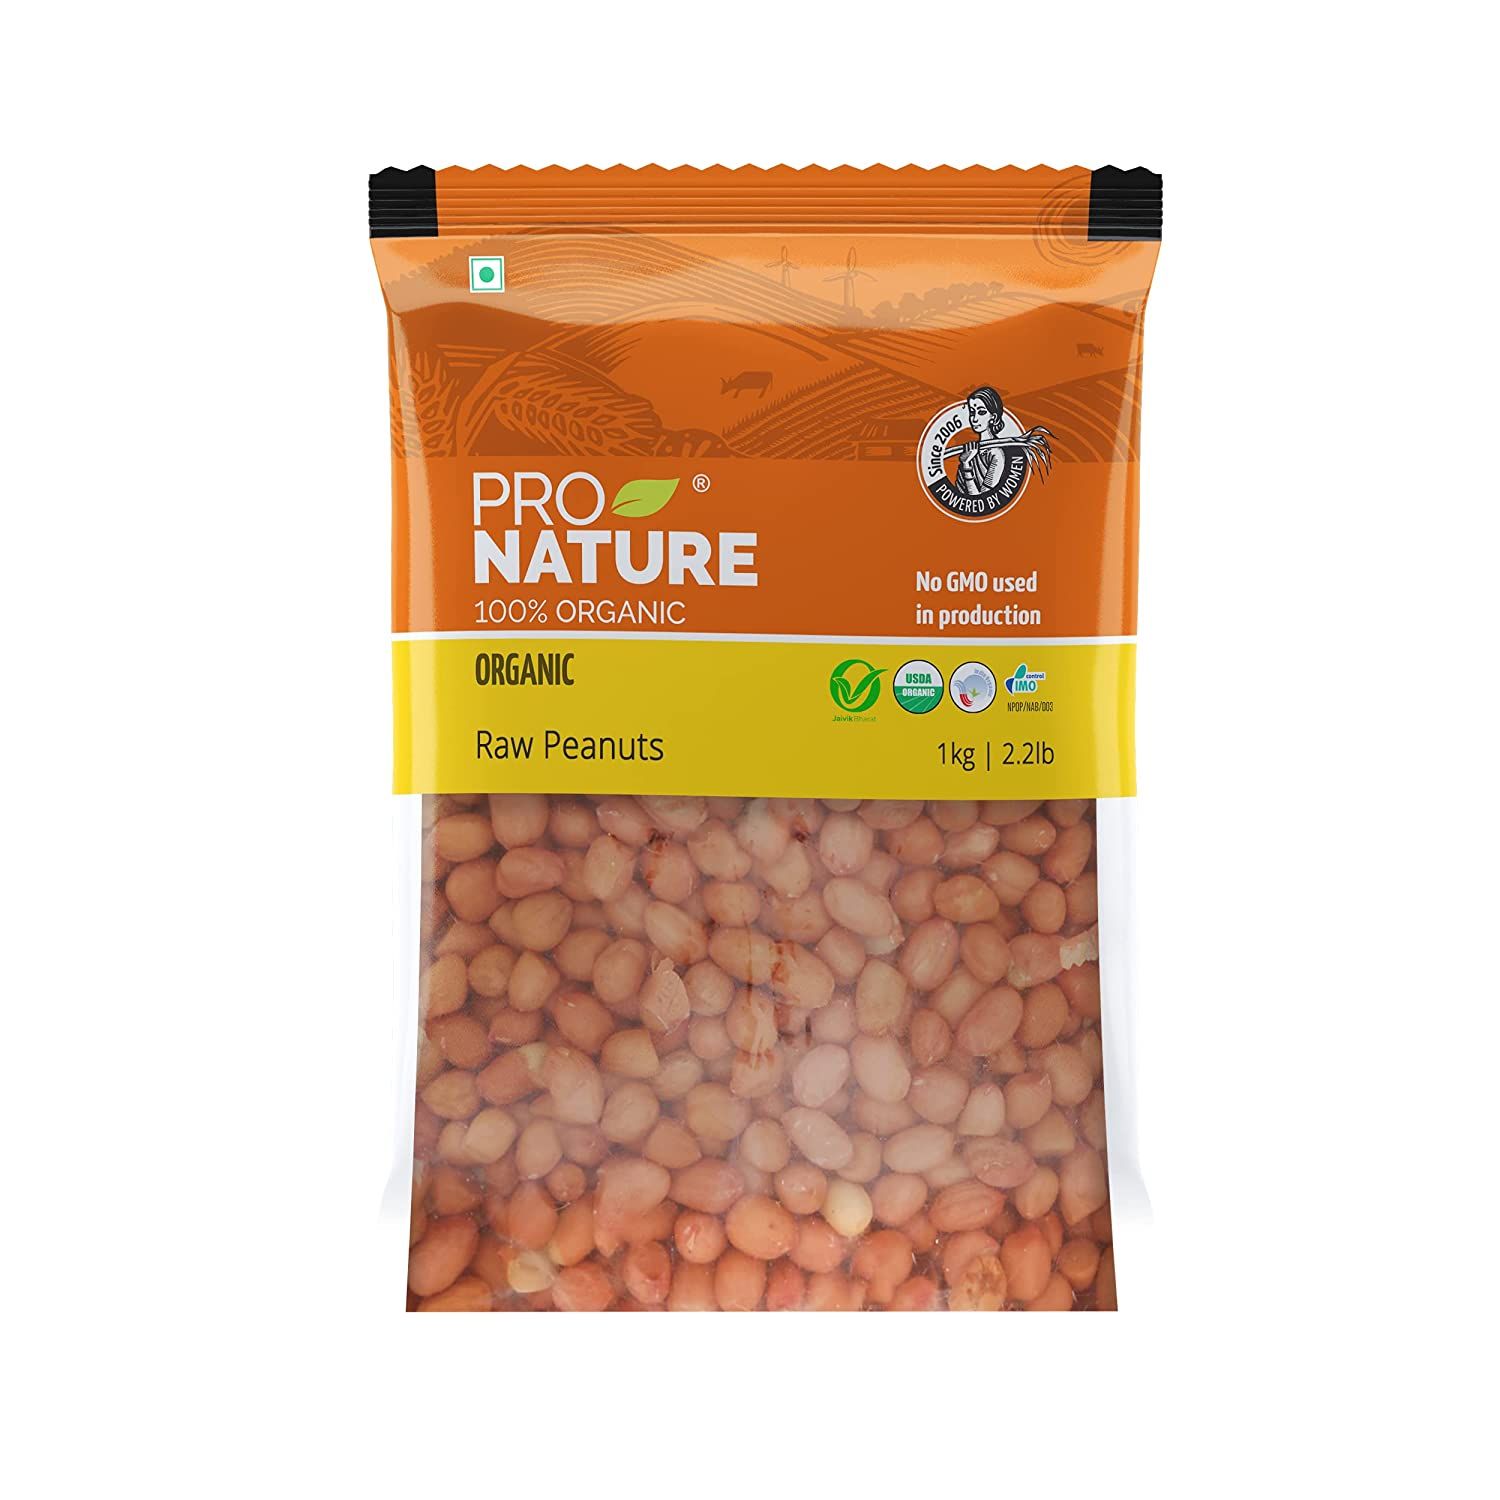 Pro Nature Organic Raw Peanuts Image